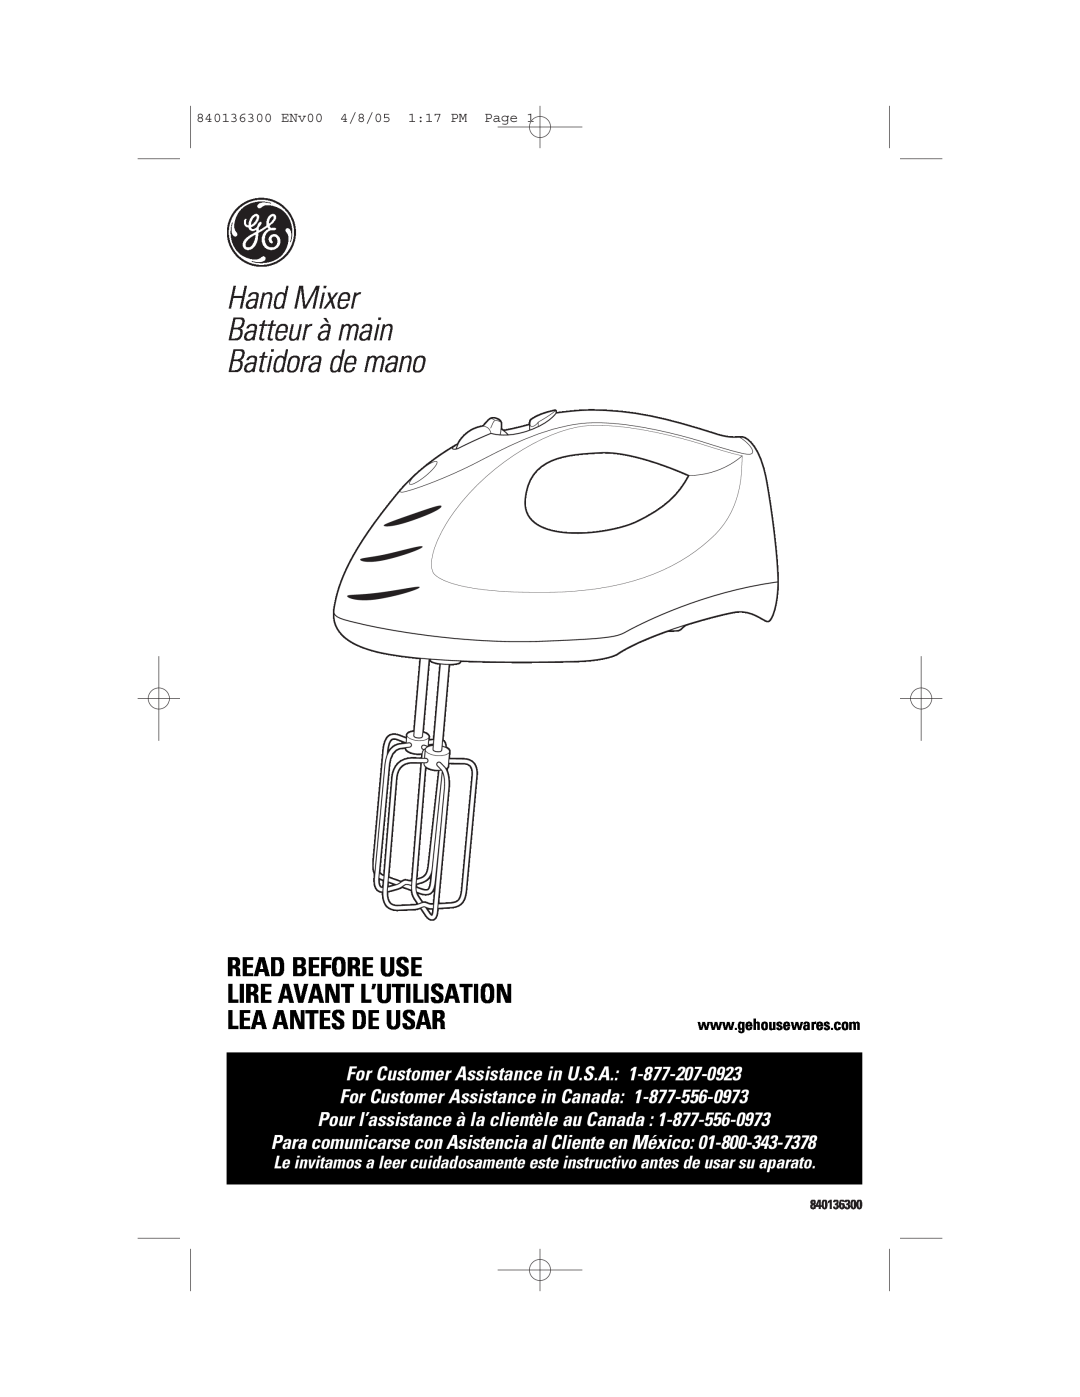 GE 169024 manual Hand Mixer Batteur à main Batidora de mano, Read Before Use Lire Avant L’Utilisation, Lea Antes De Usar 